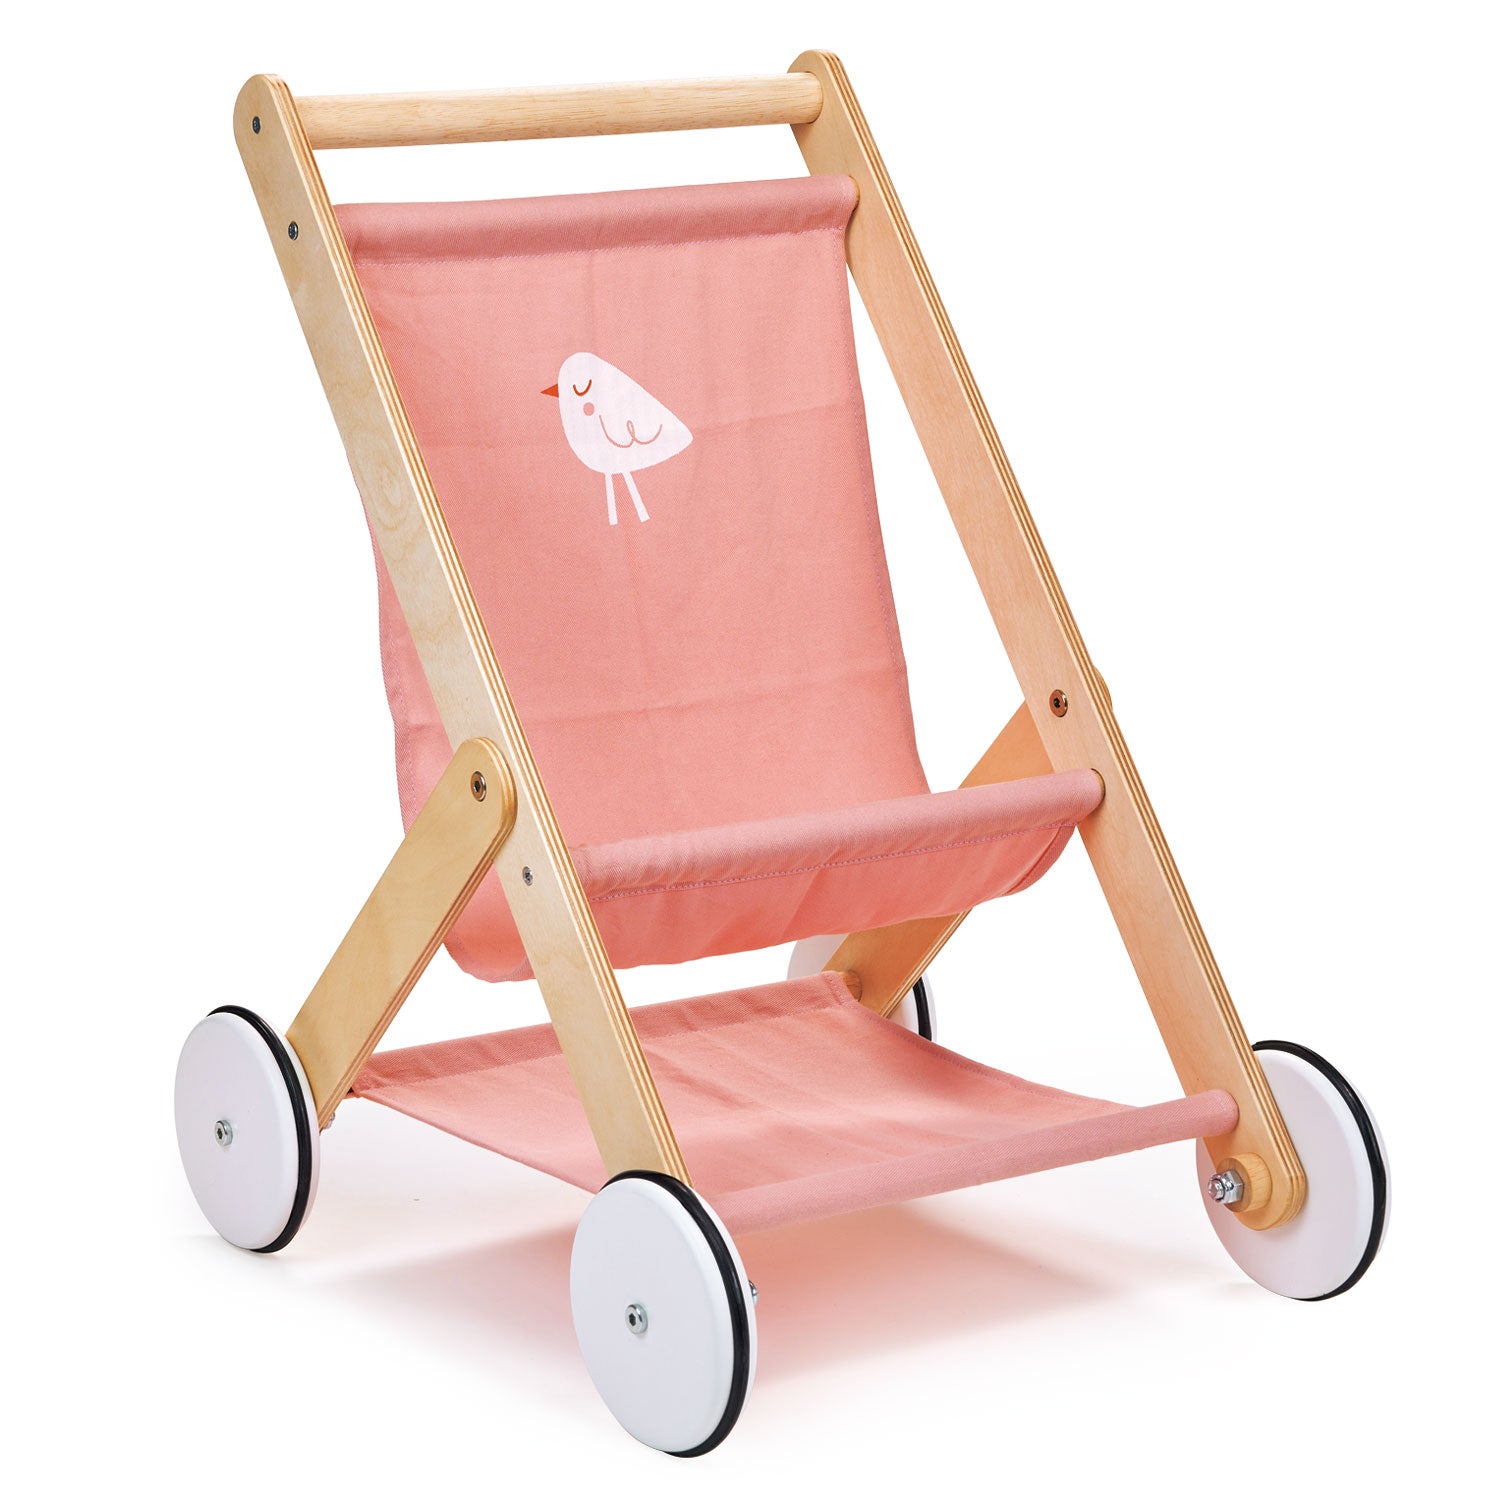 Mentari baby doll stroller in pink with a little bird motif